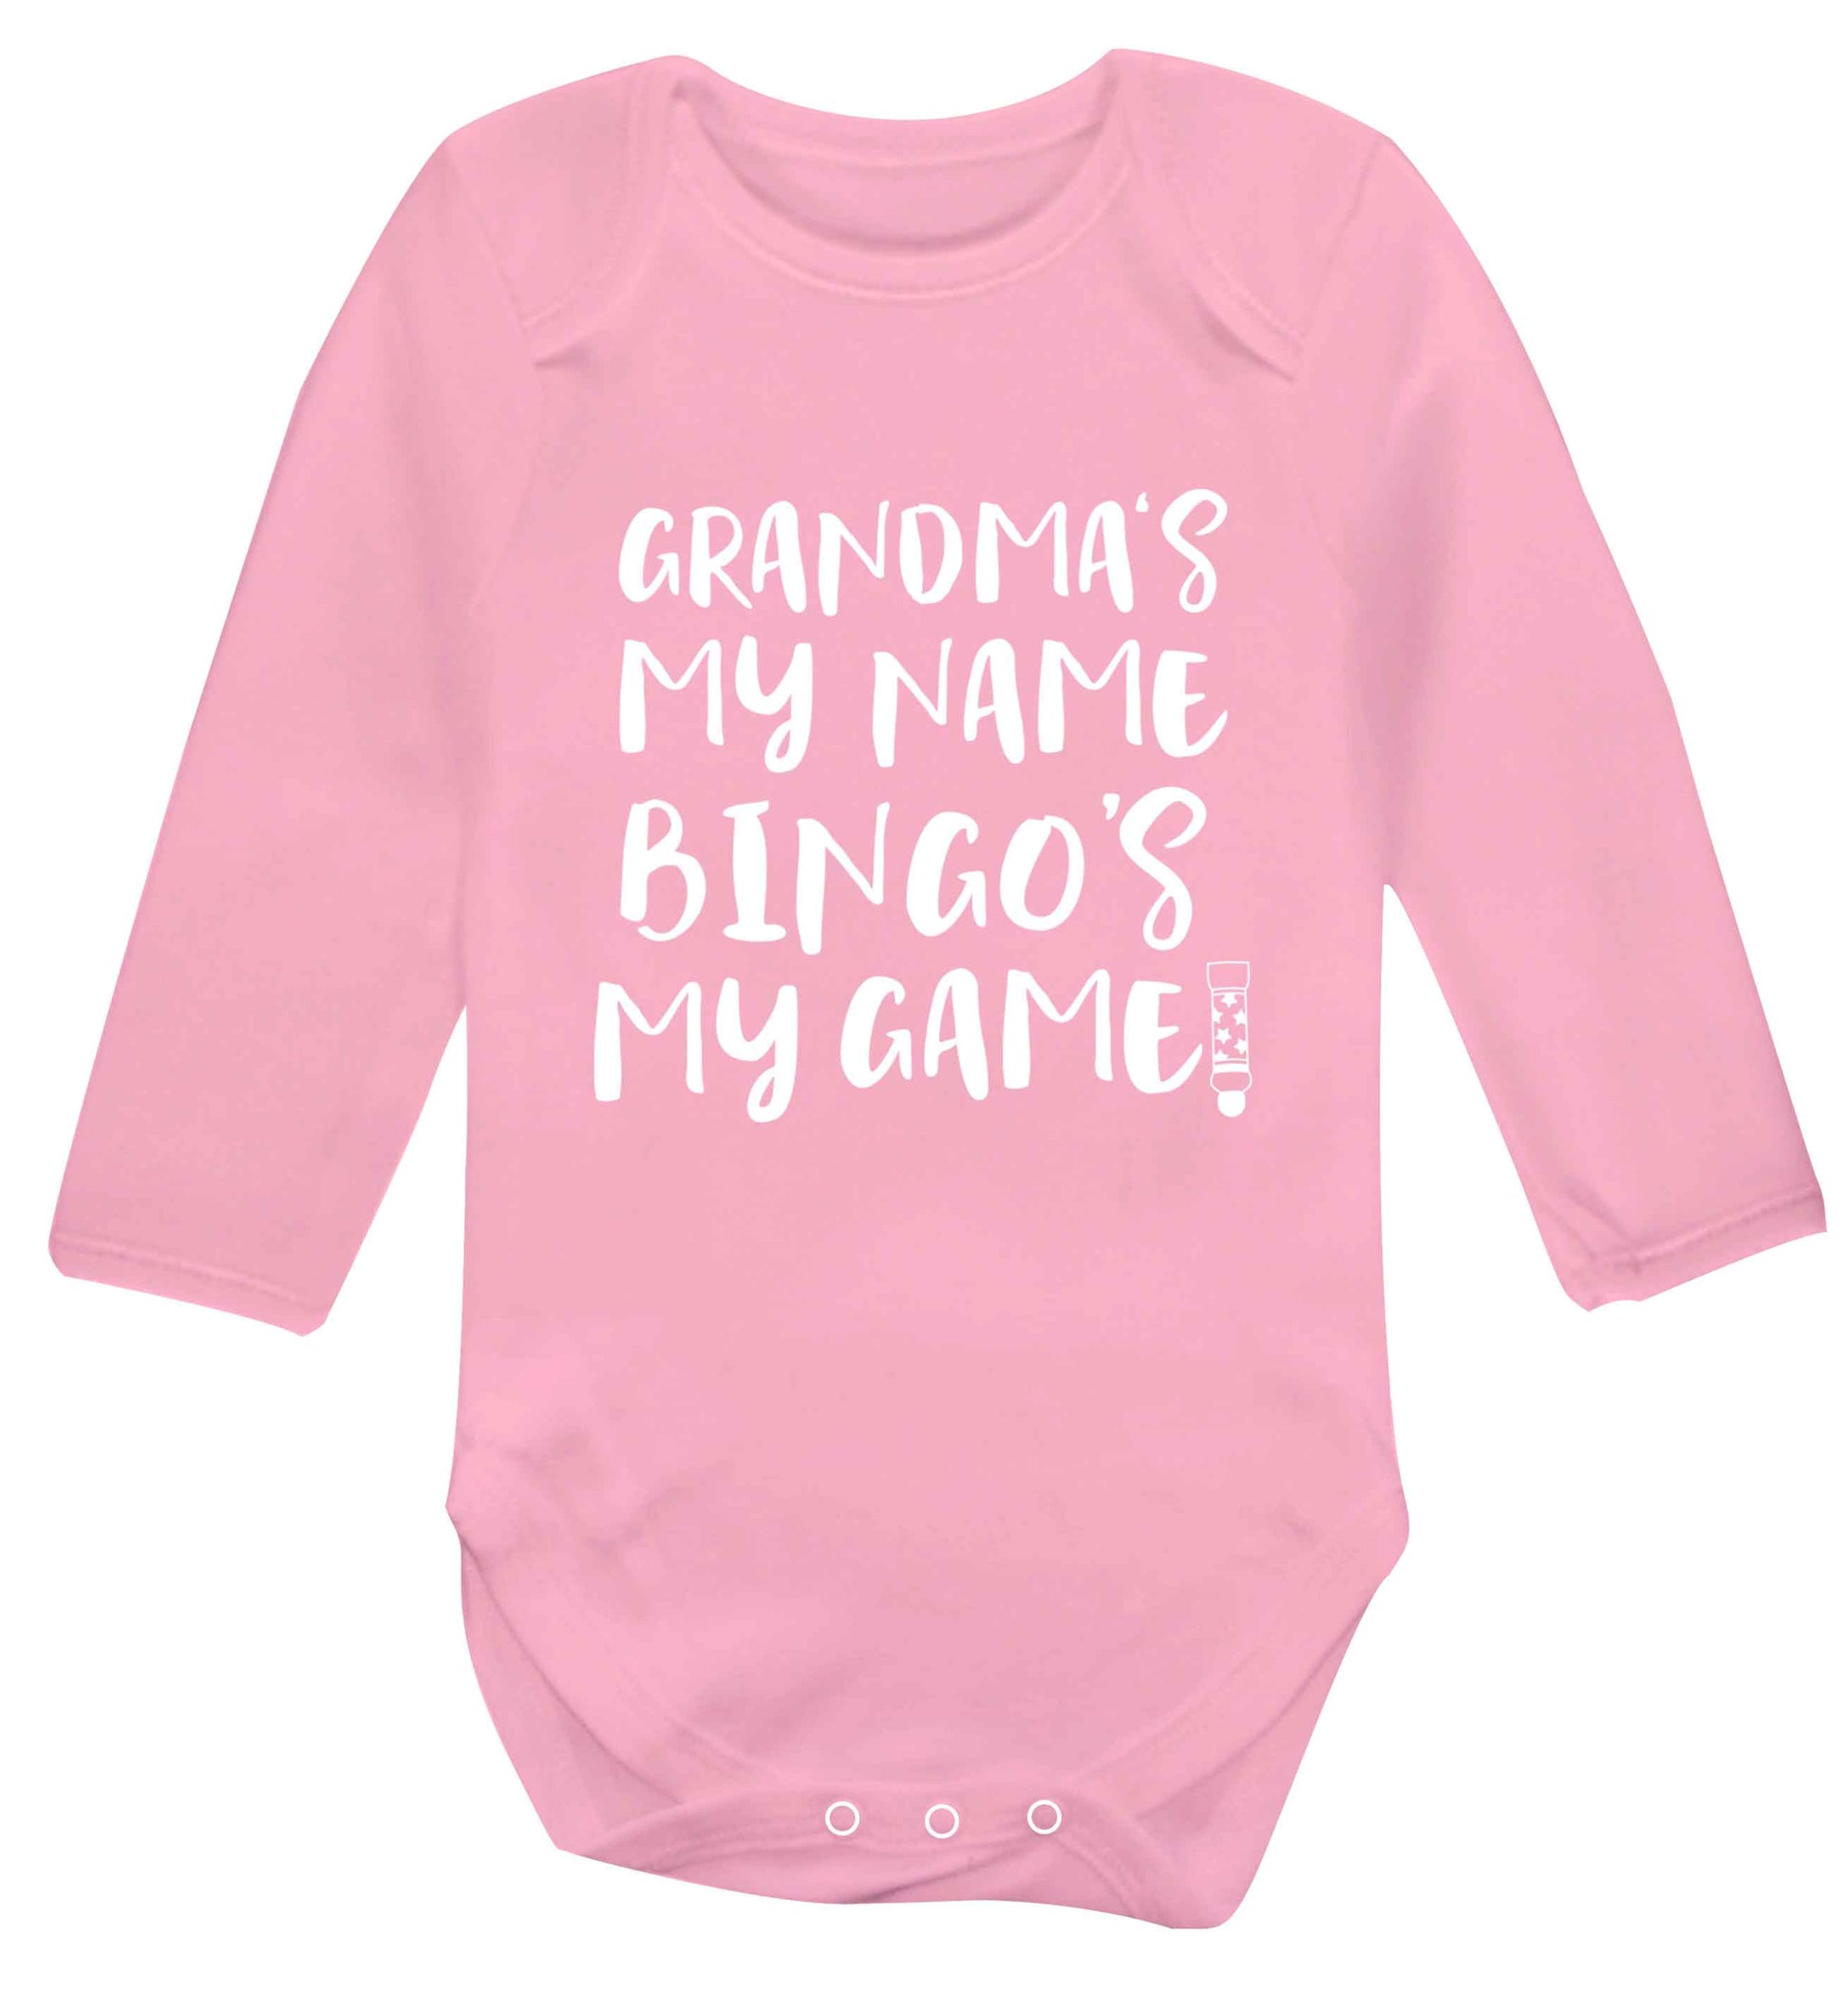 Grandma's my name bingo's my game! Baby Vest long sleeved pale pink 6-12 months